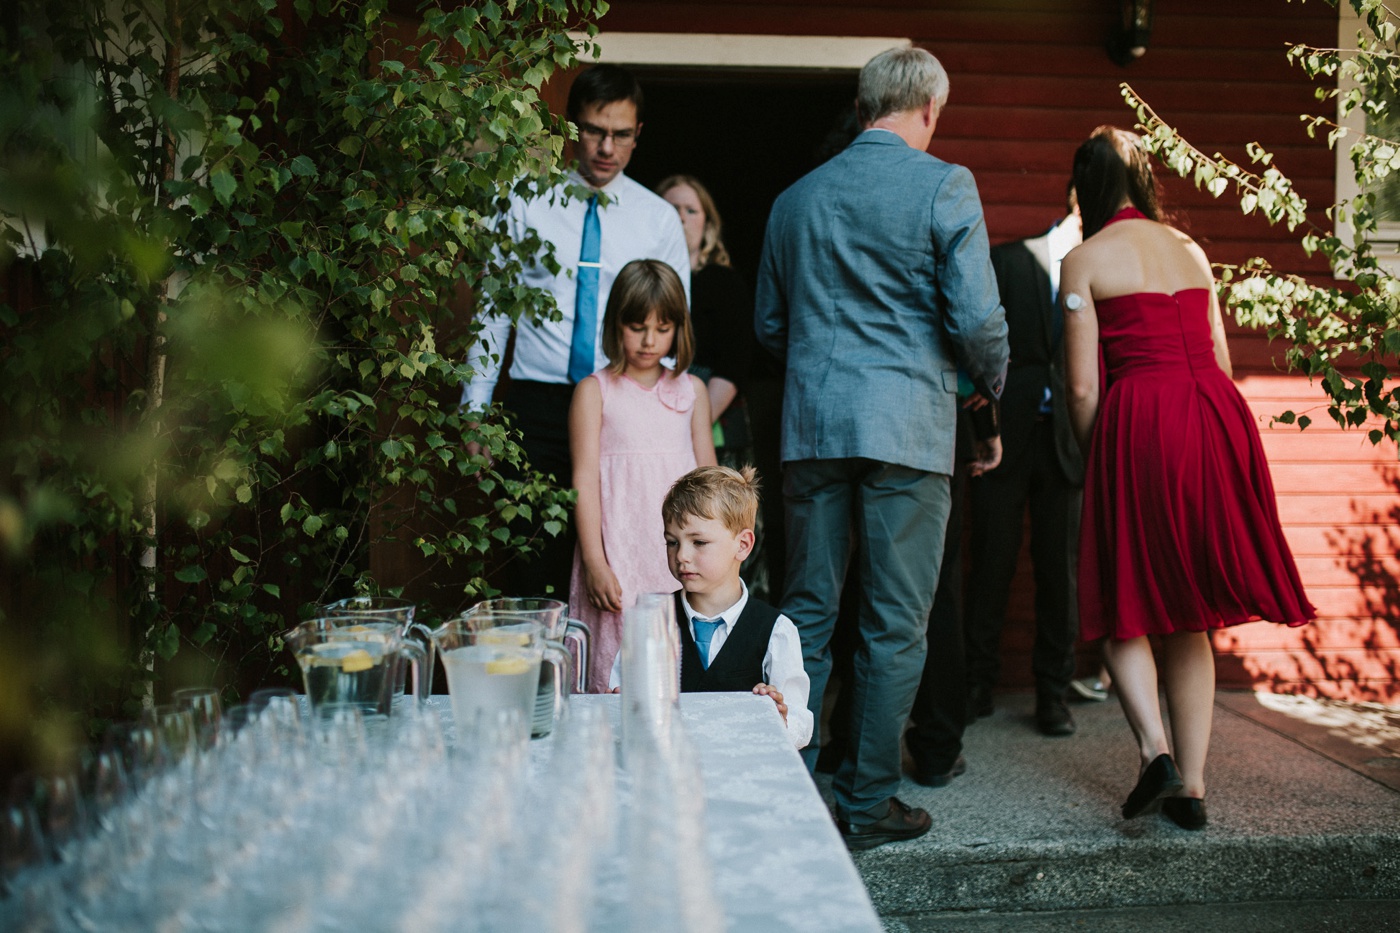 ceciliajoakim_sweden-countryside-summer-wedding_melbourne-fun-quirky-wedding-photography_57